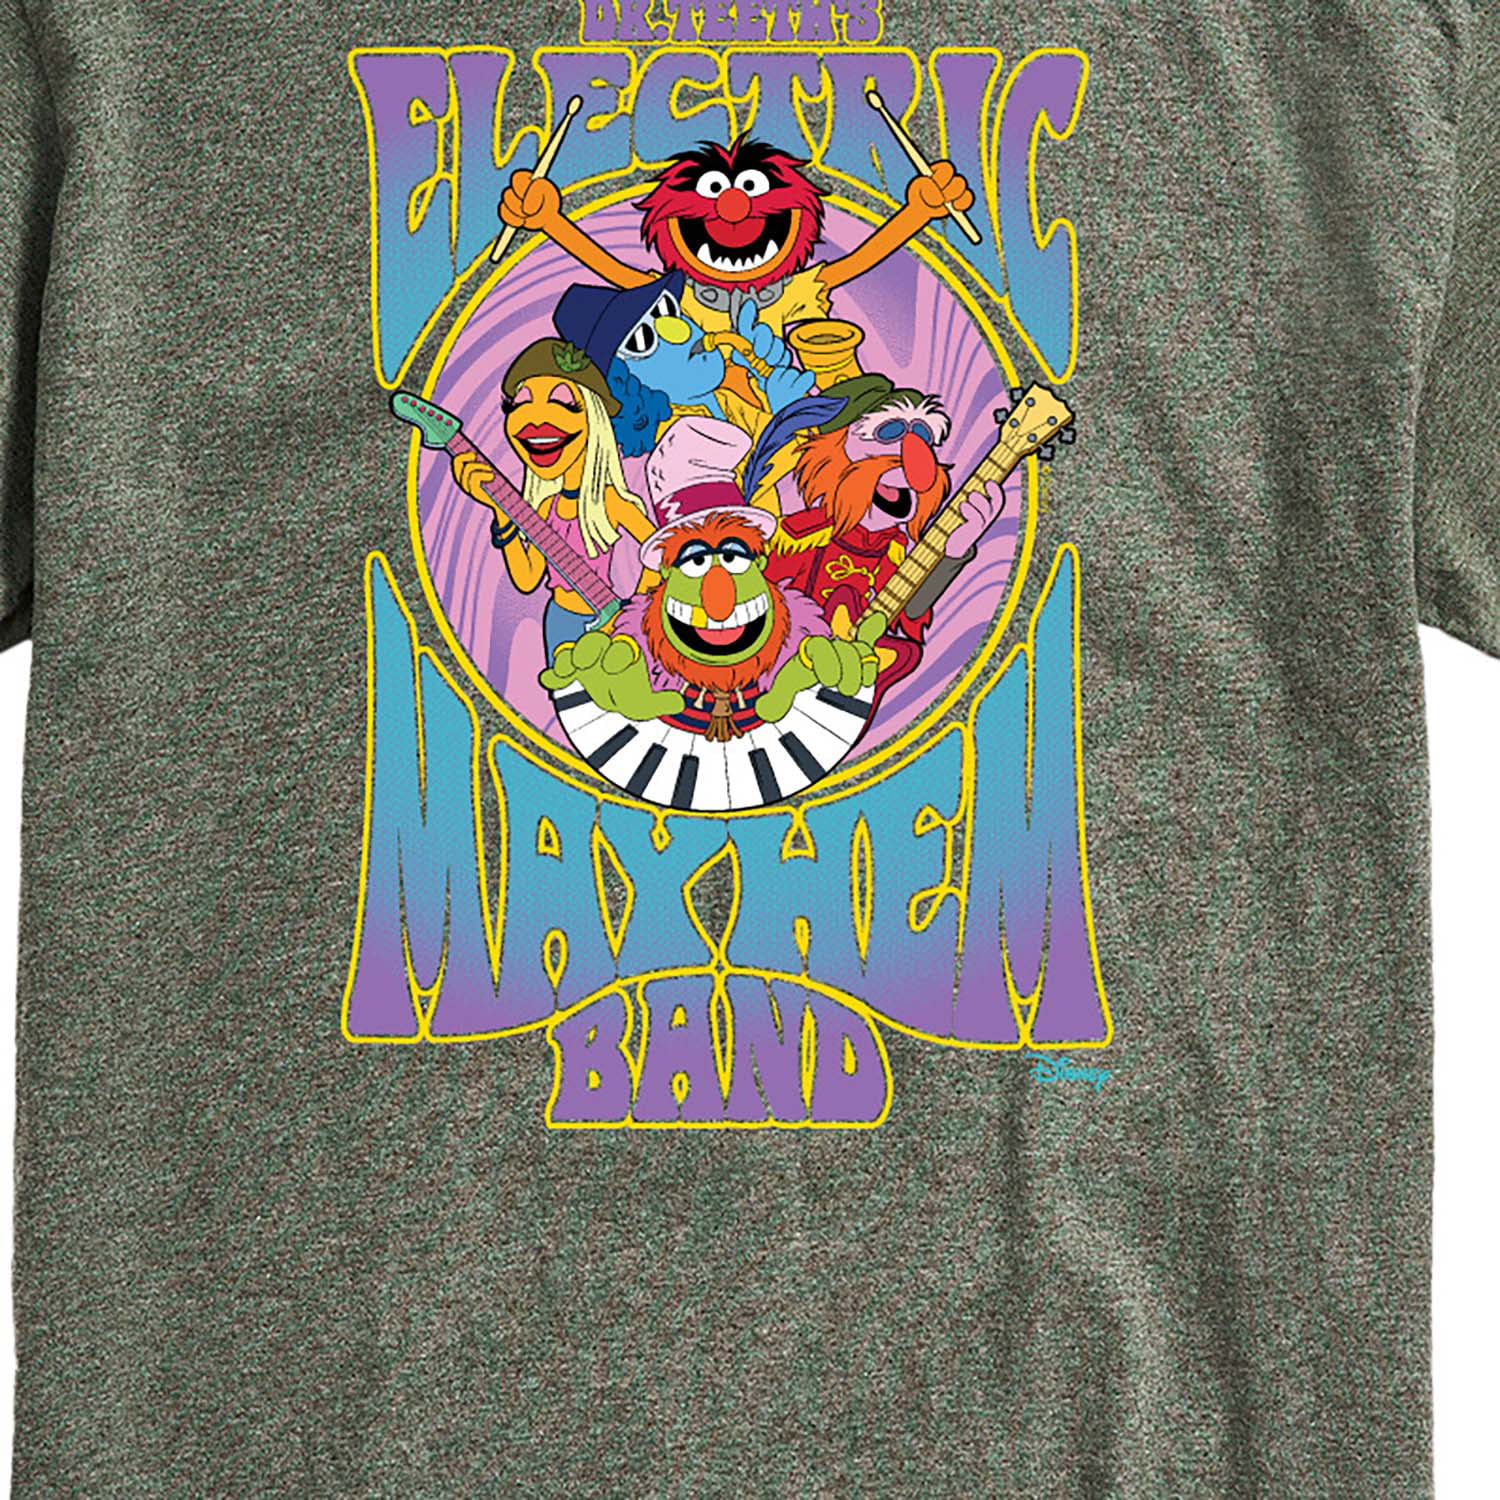 Muppets - Dr Teeth Electric Mayhem Band - Men\'s Short Sleeve Graphic T-Shirt